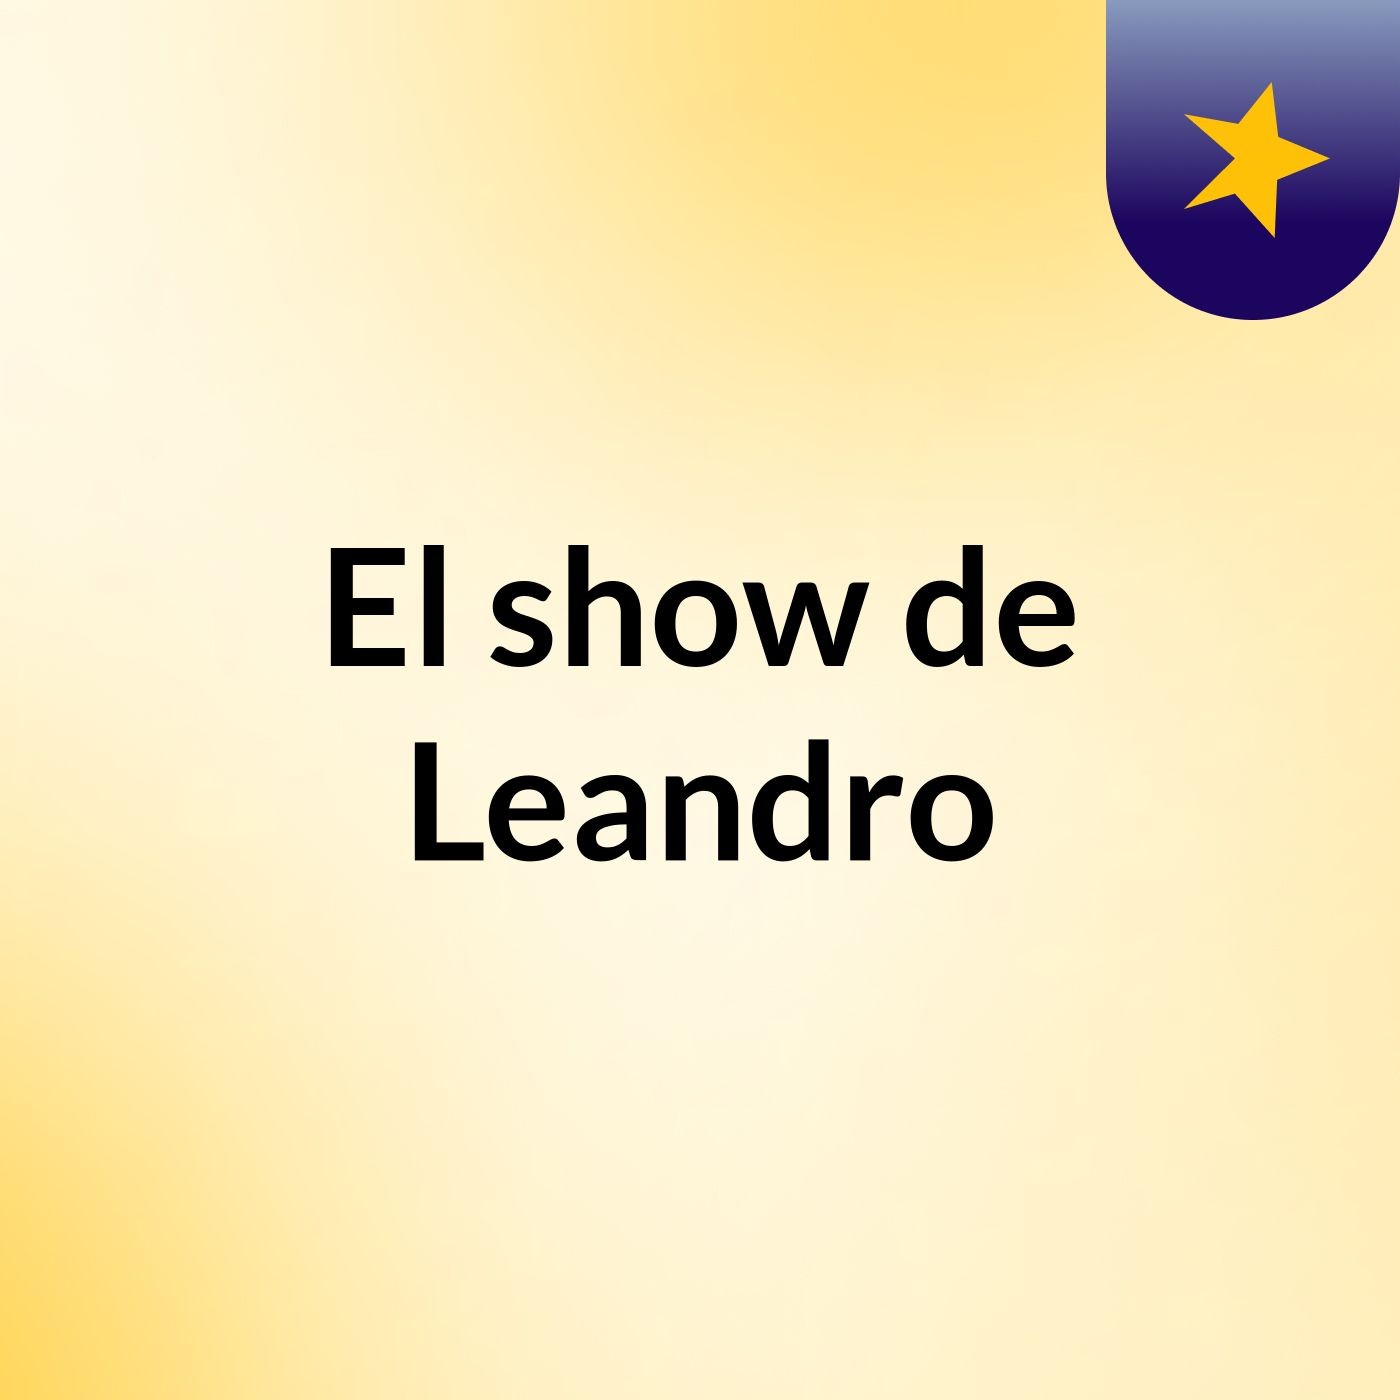 El show de Leandro